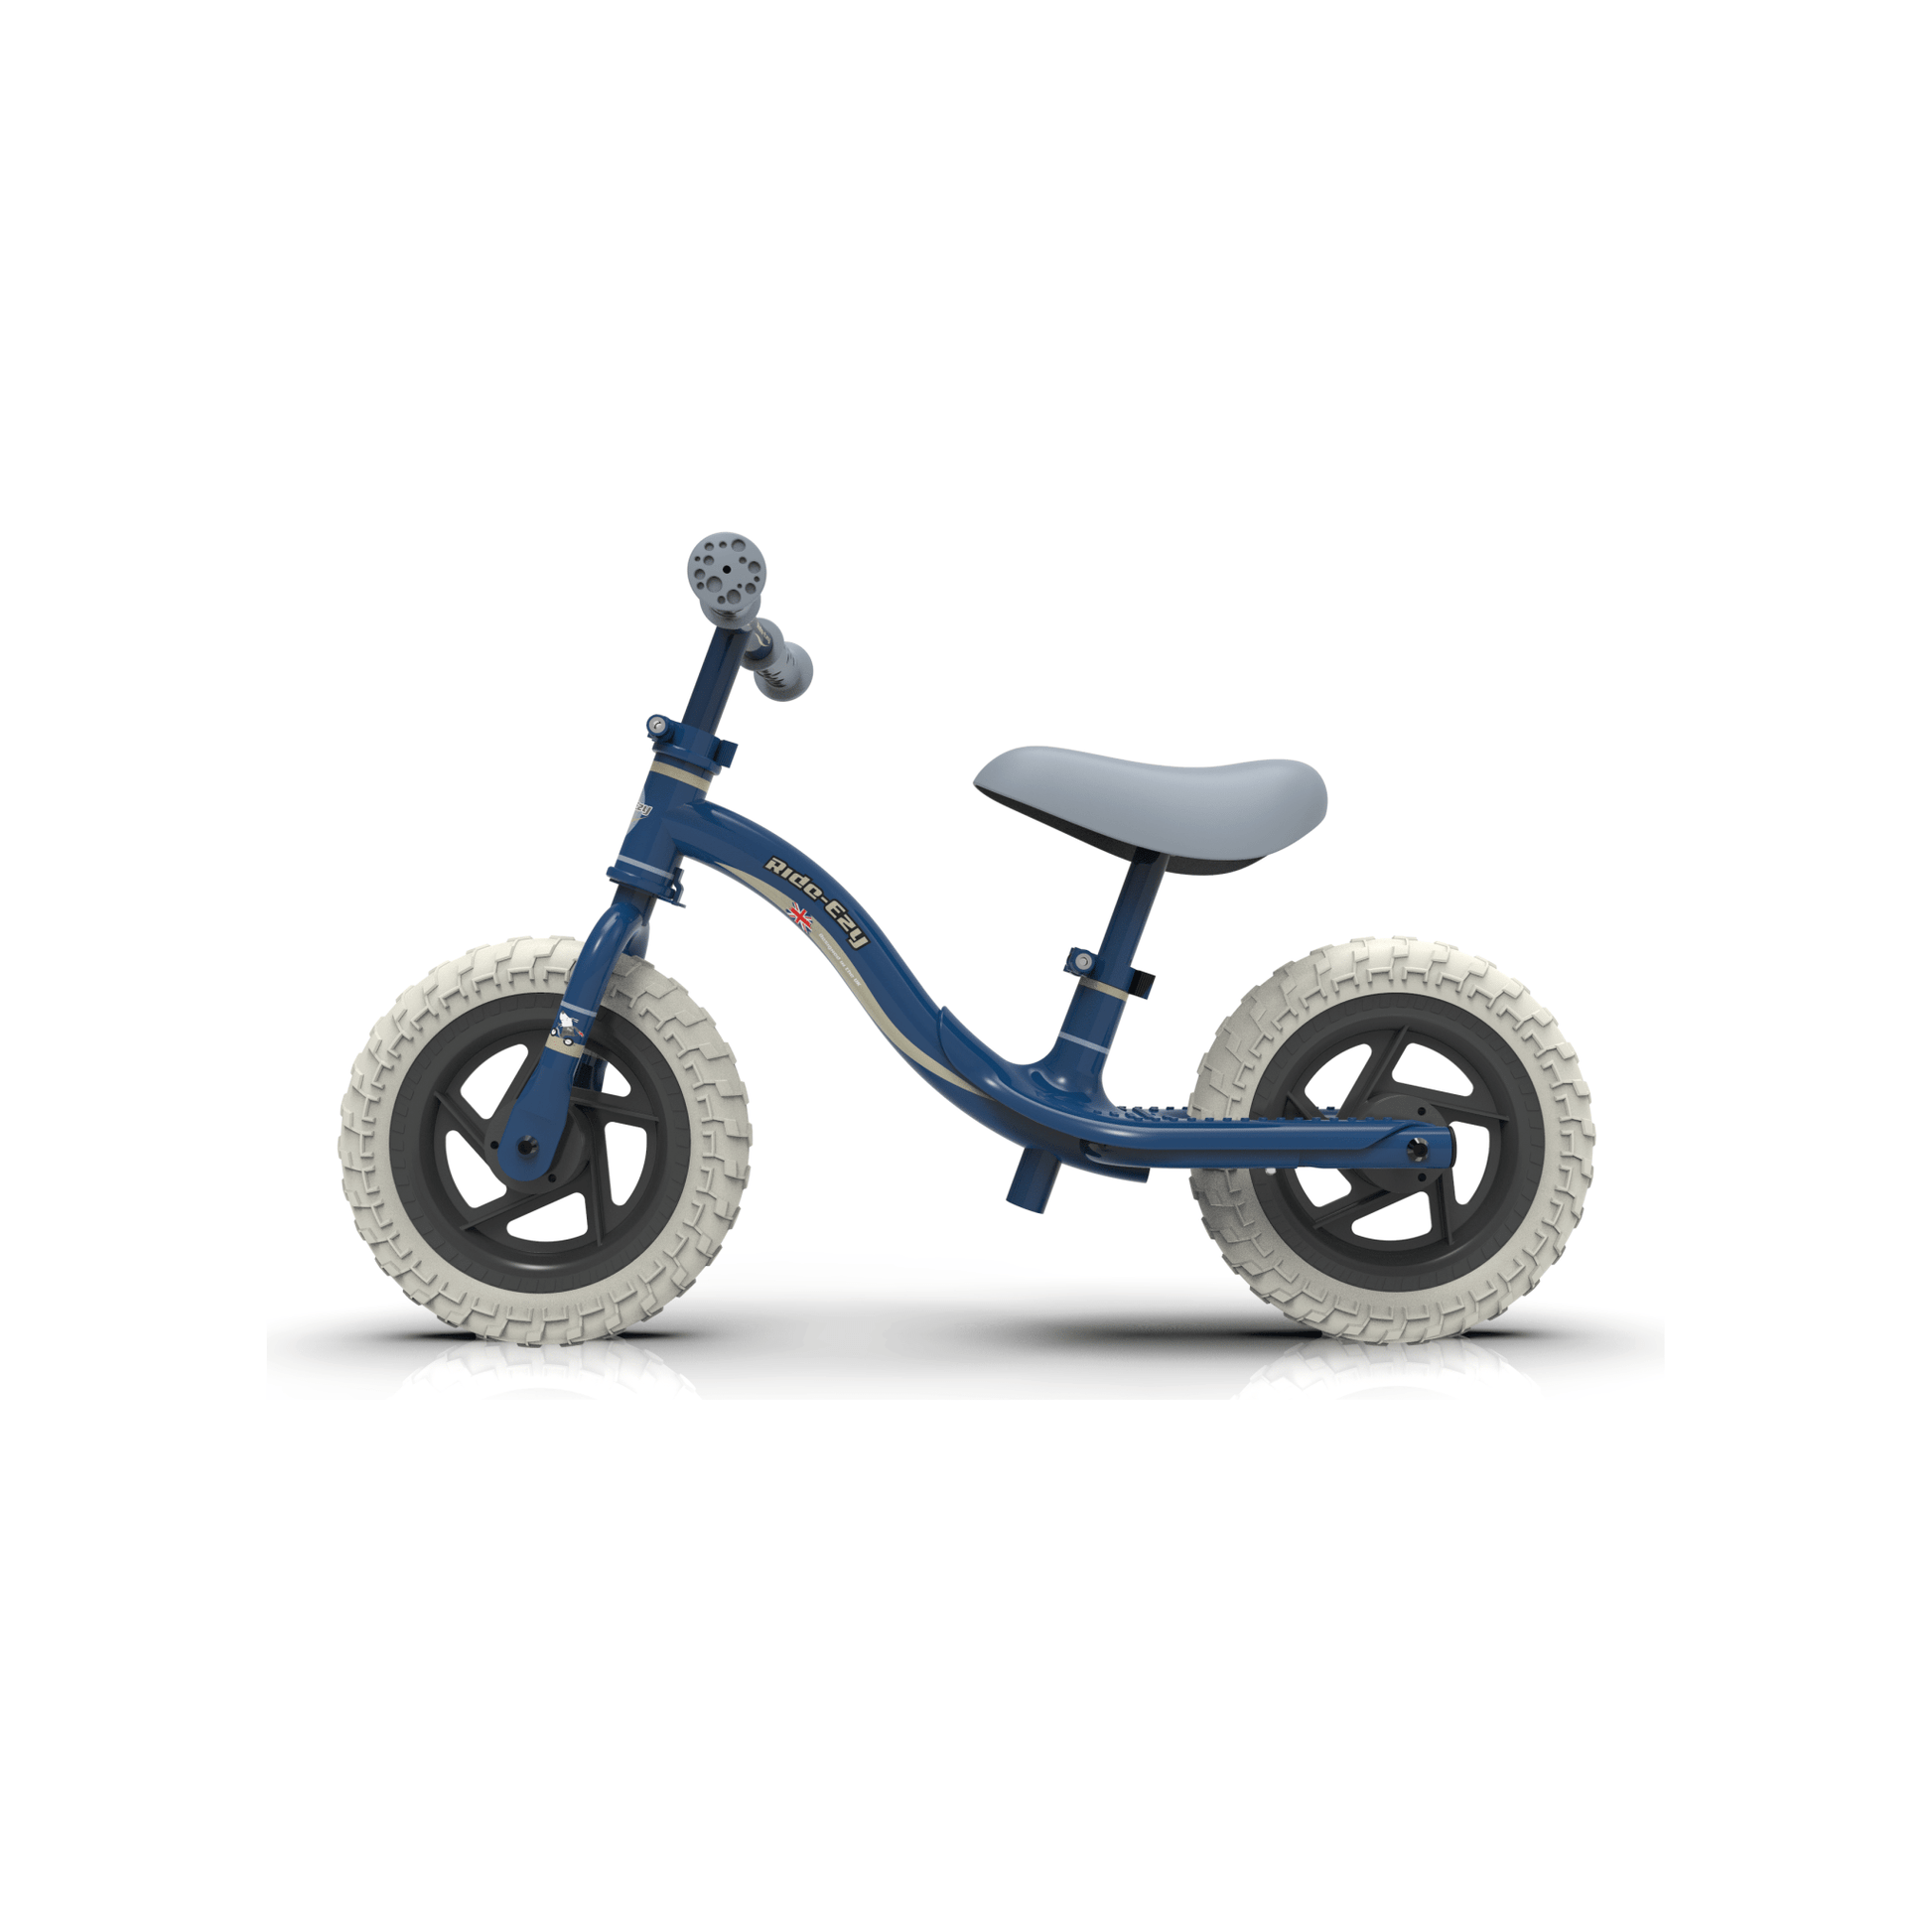 Ride-Ezy Go Balance Bike - Blue & Silver left side